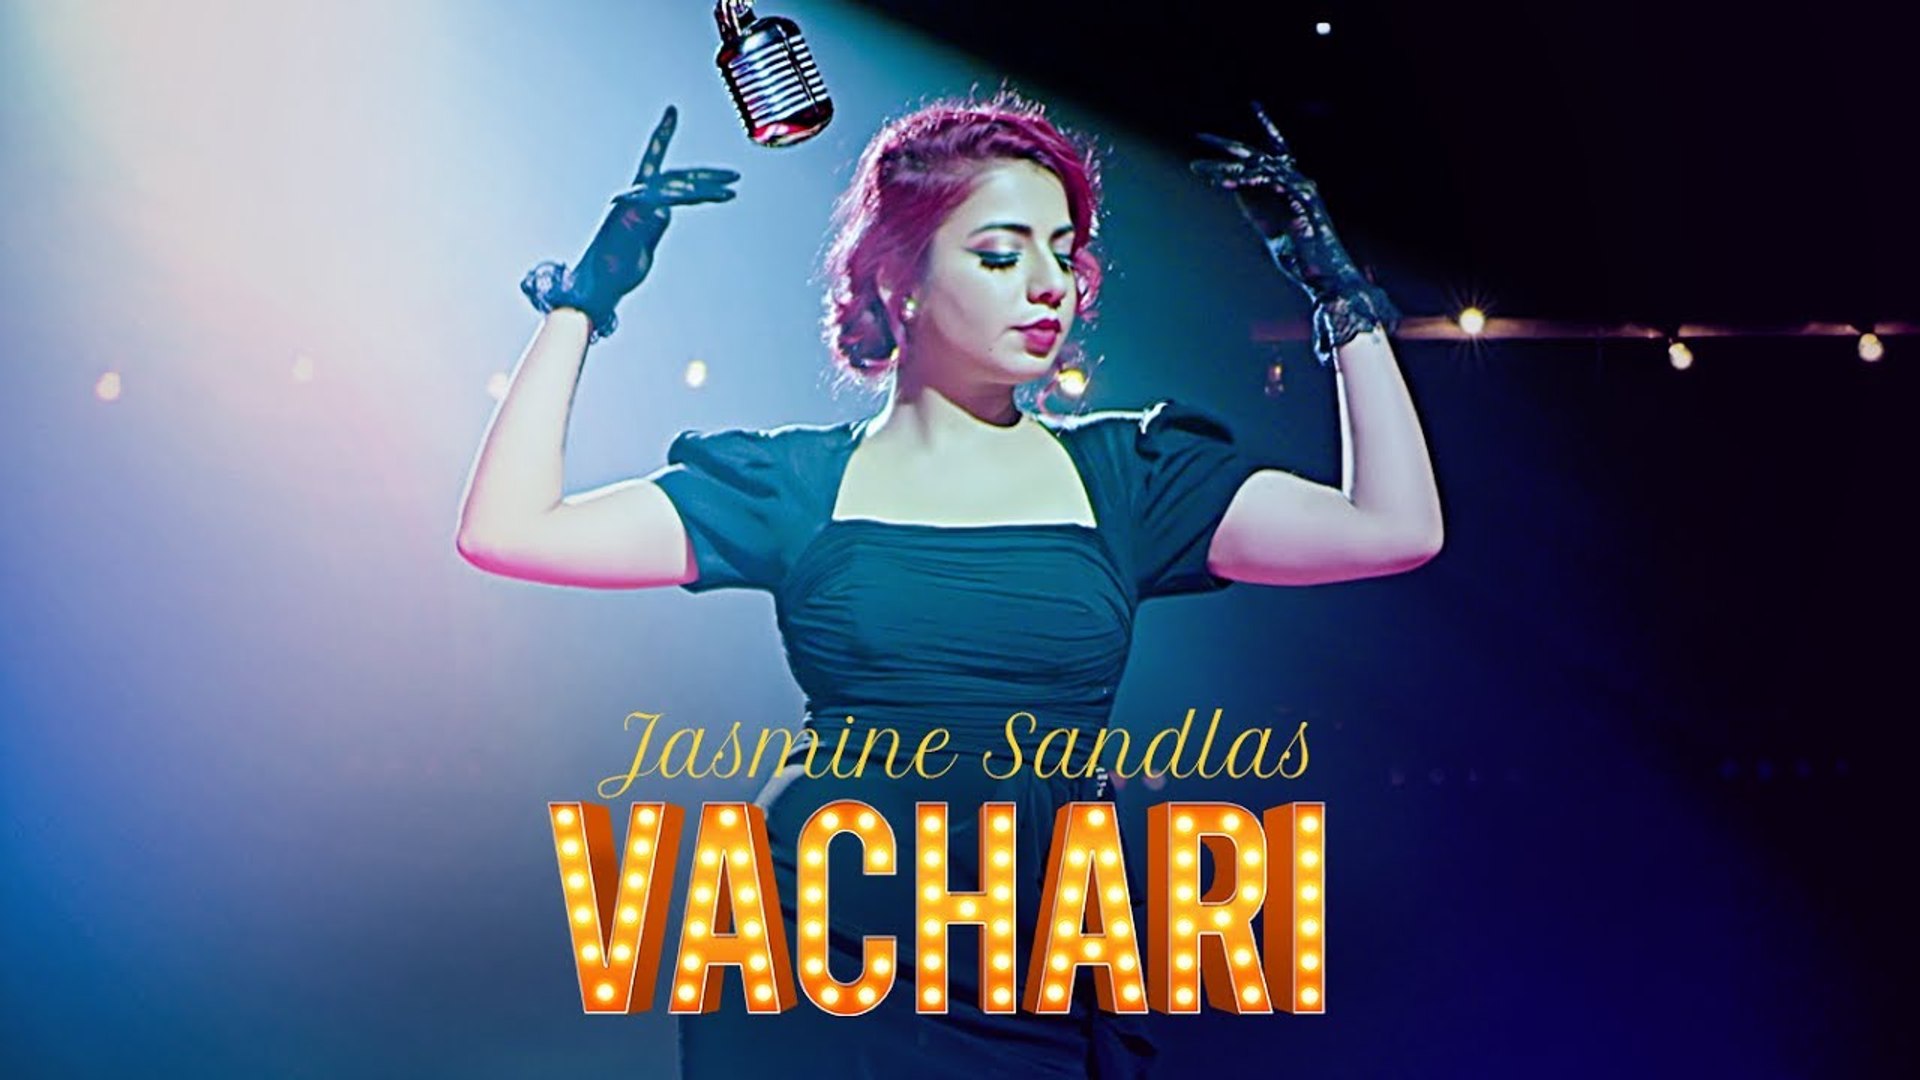 Jasmine Sandlas Sex Video - Latest Punjabi Songs - Vachari - HD(Full Song) - Jasmine Sandlas - Official  Video Song - Intense - PK hungama mASTI Official Channel - video Dailymotion